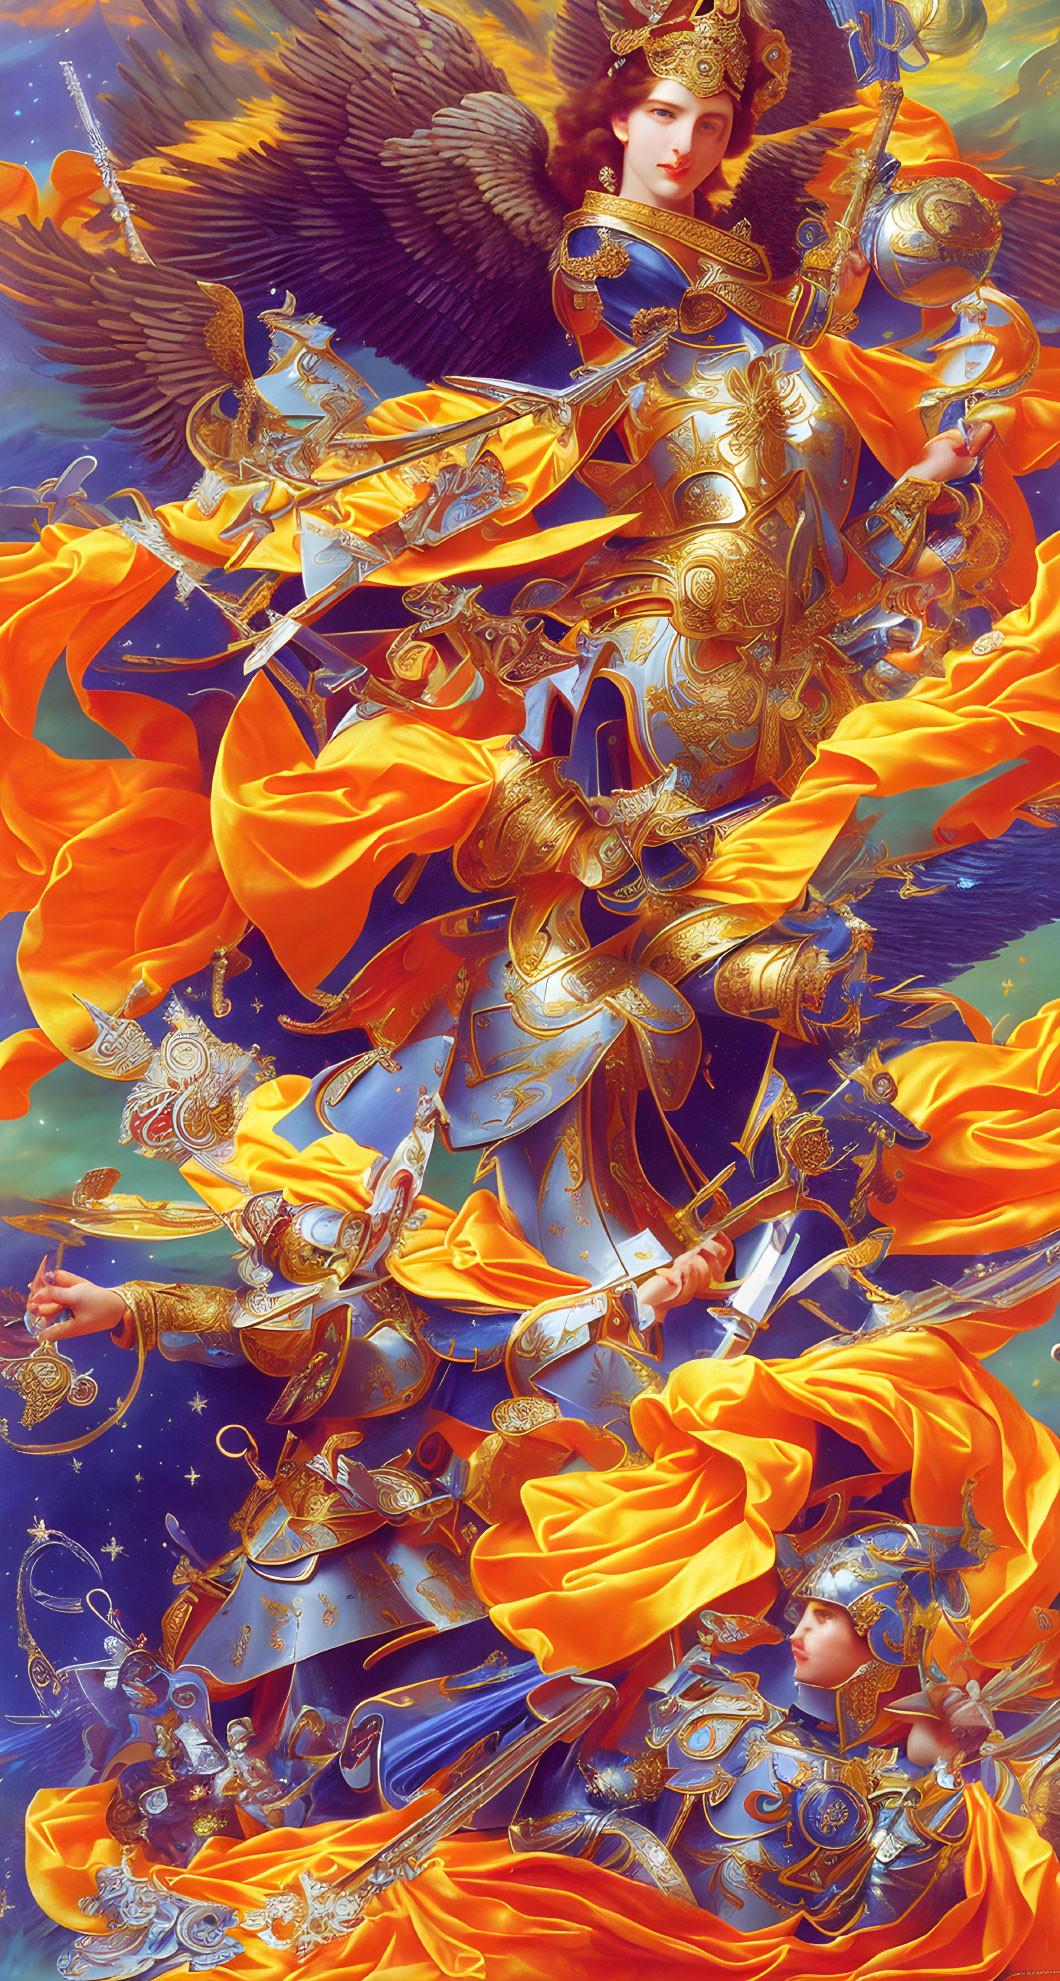 Celestial warrior digital art: multiple arms, orange cloth, golden armor, starry sky.